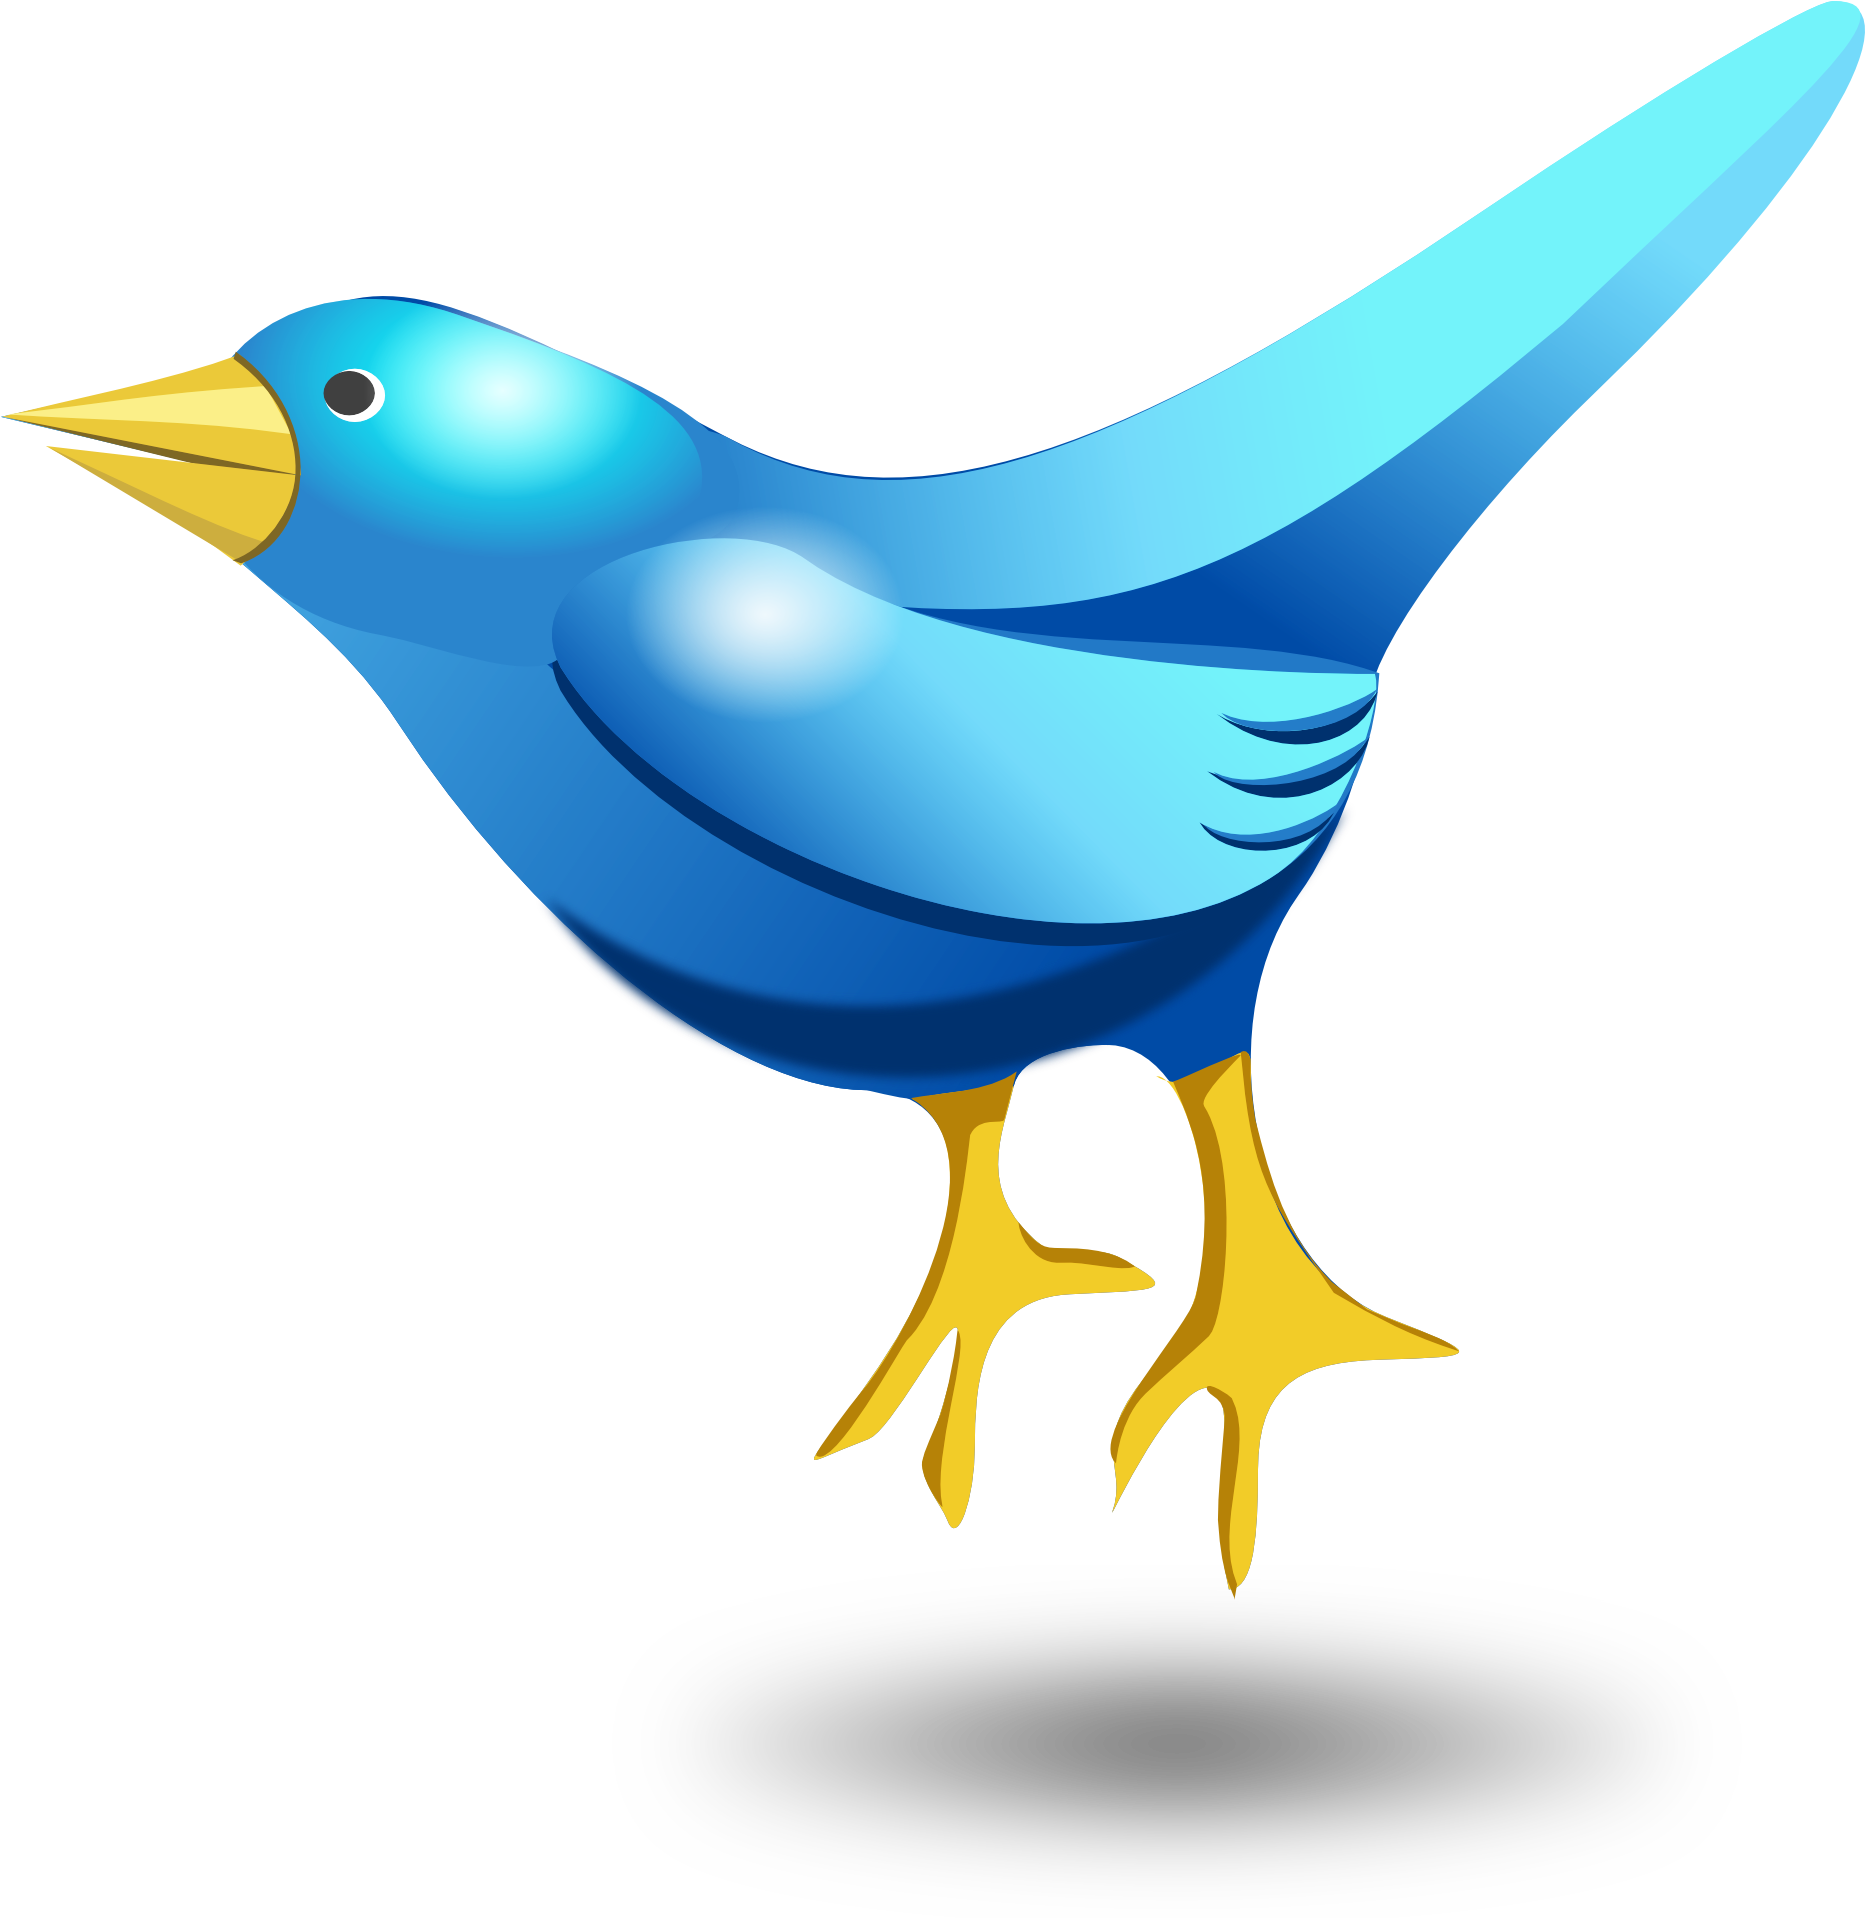 A Blue Bird With Yellow Beak